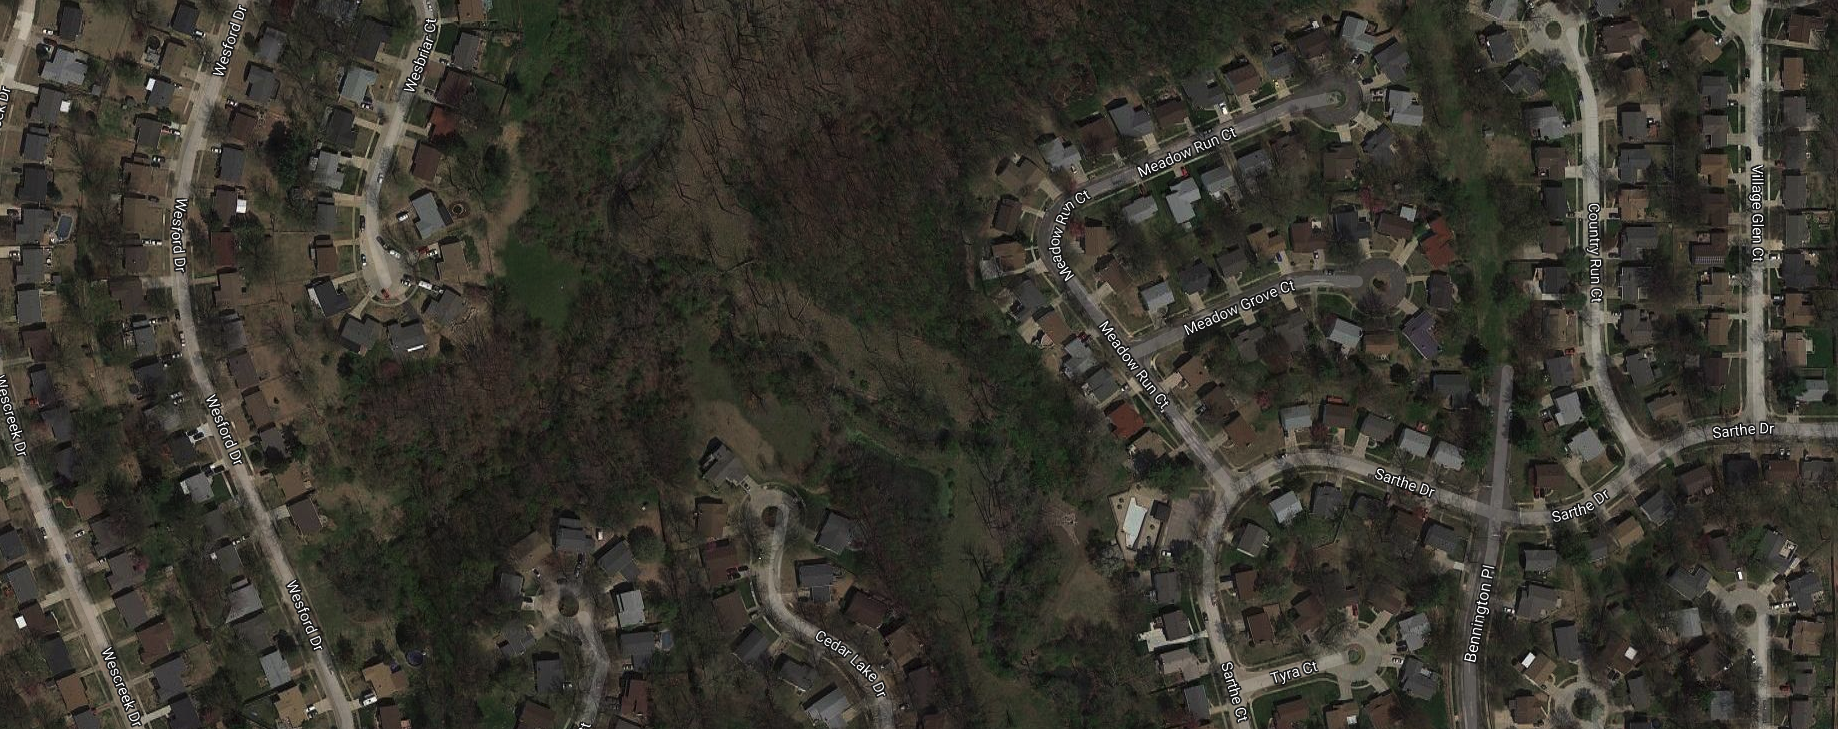 Maryland Heights, MO (Image: Google Maps)